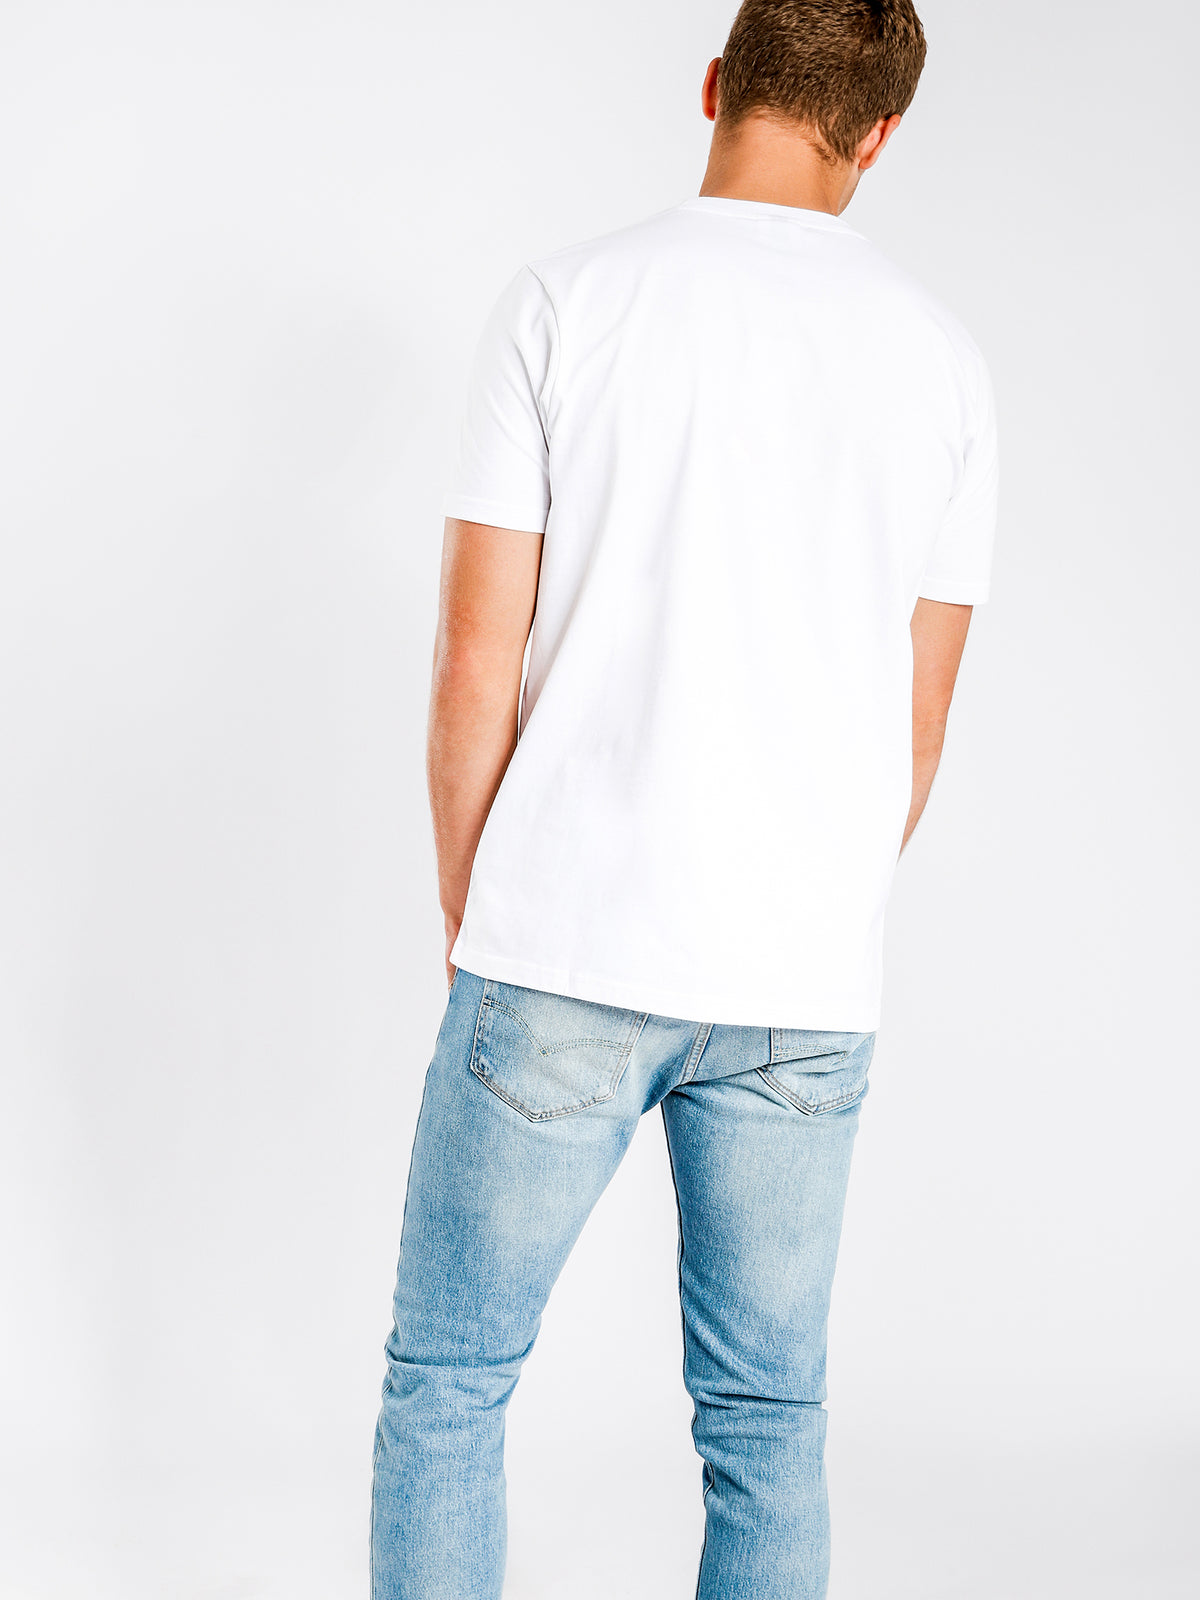 Aprel T-Shirt in White